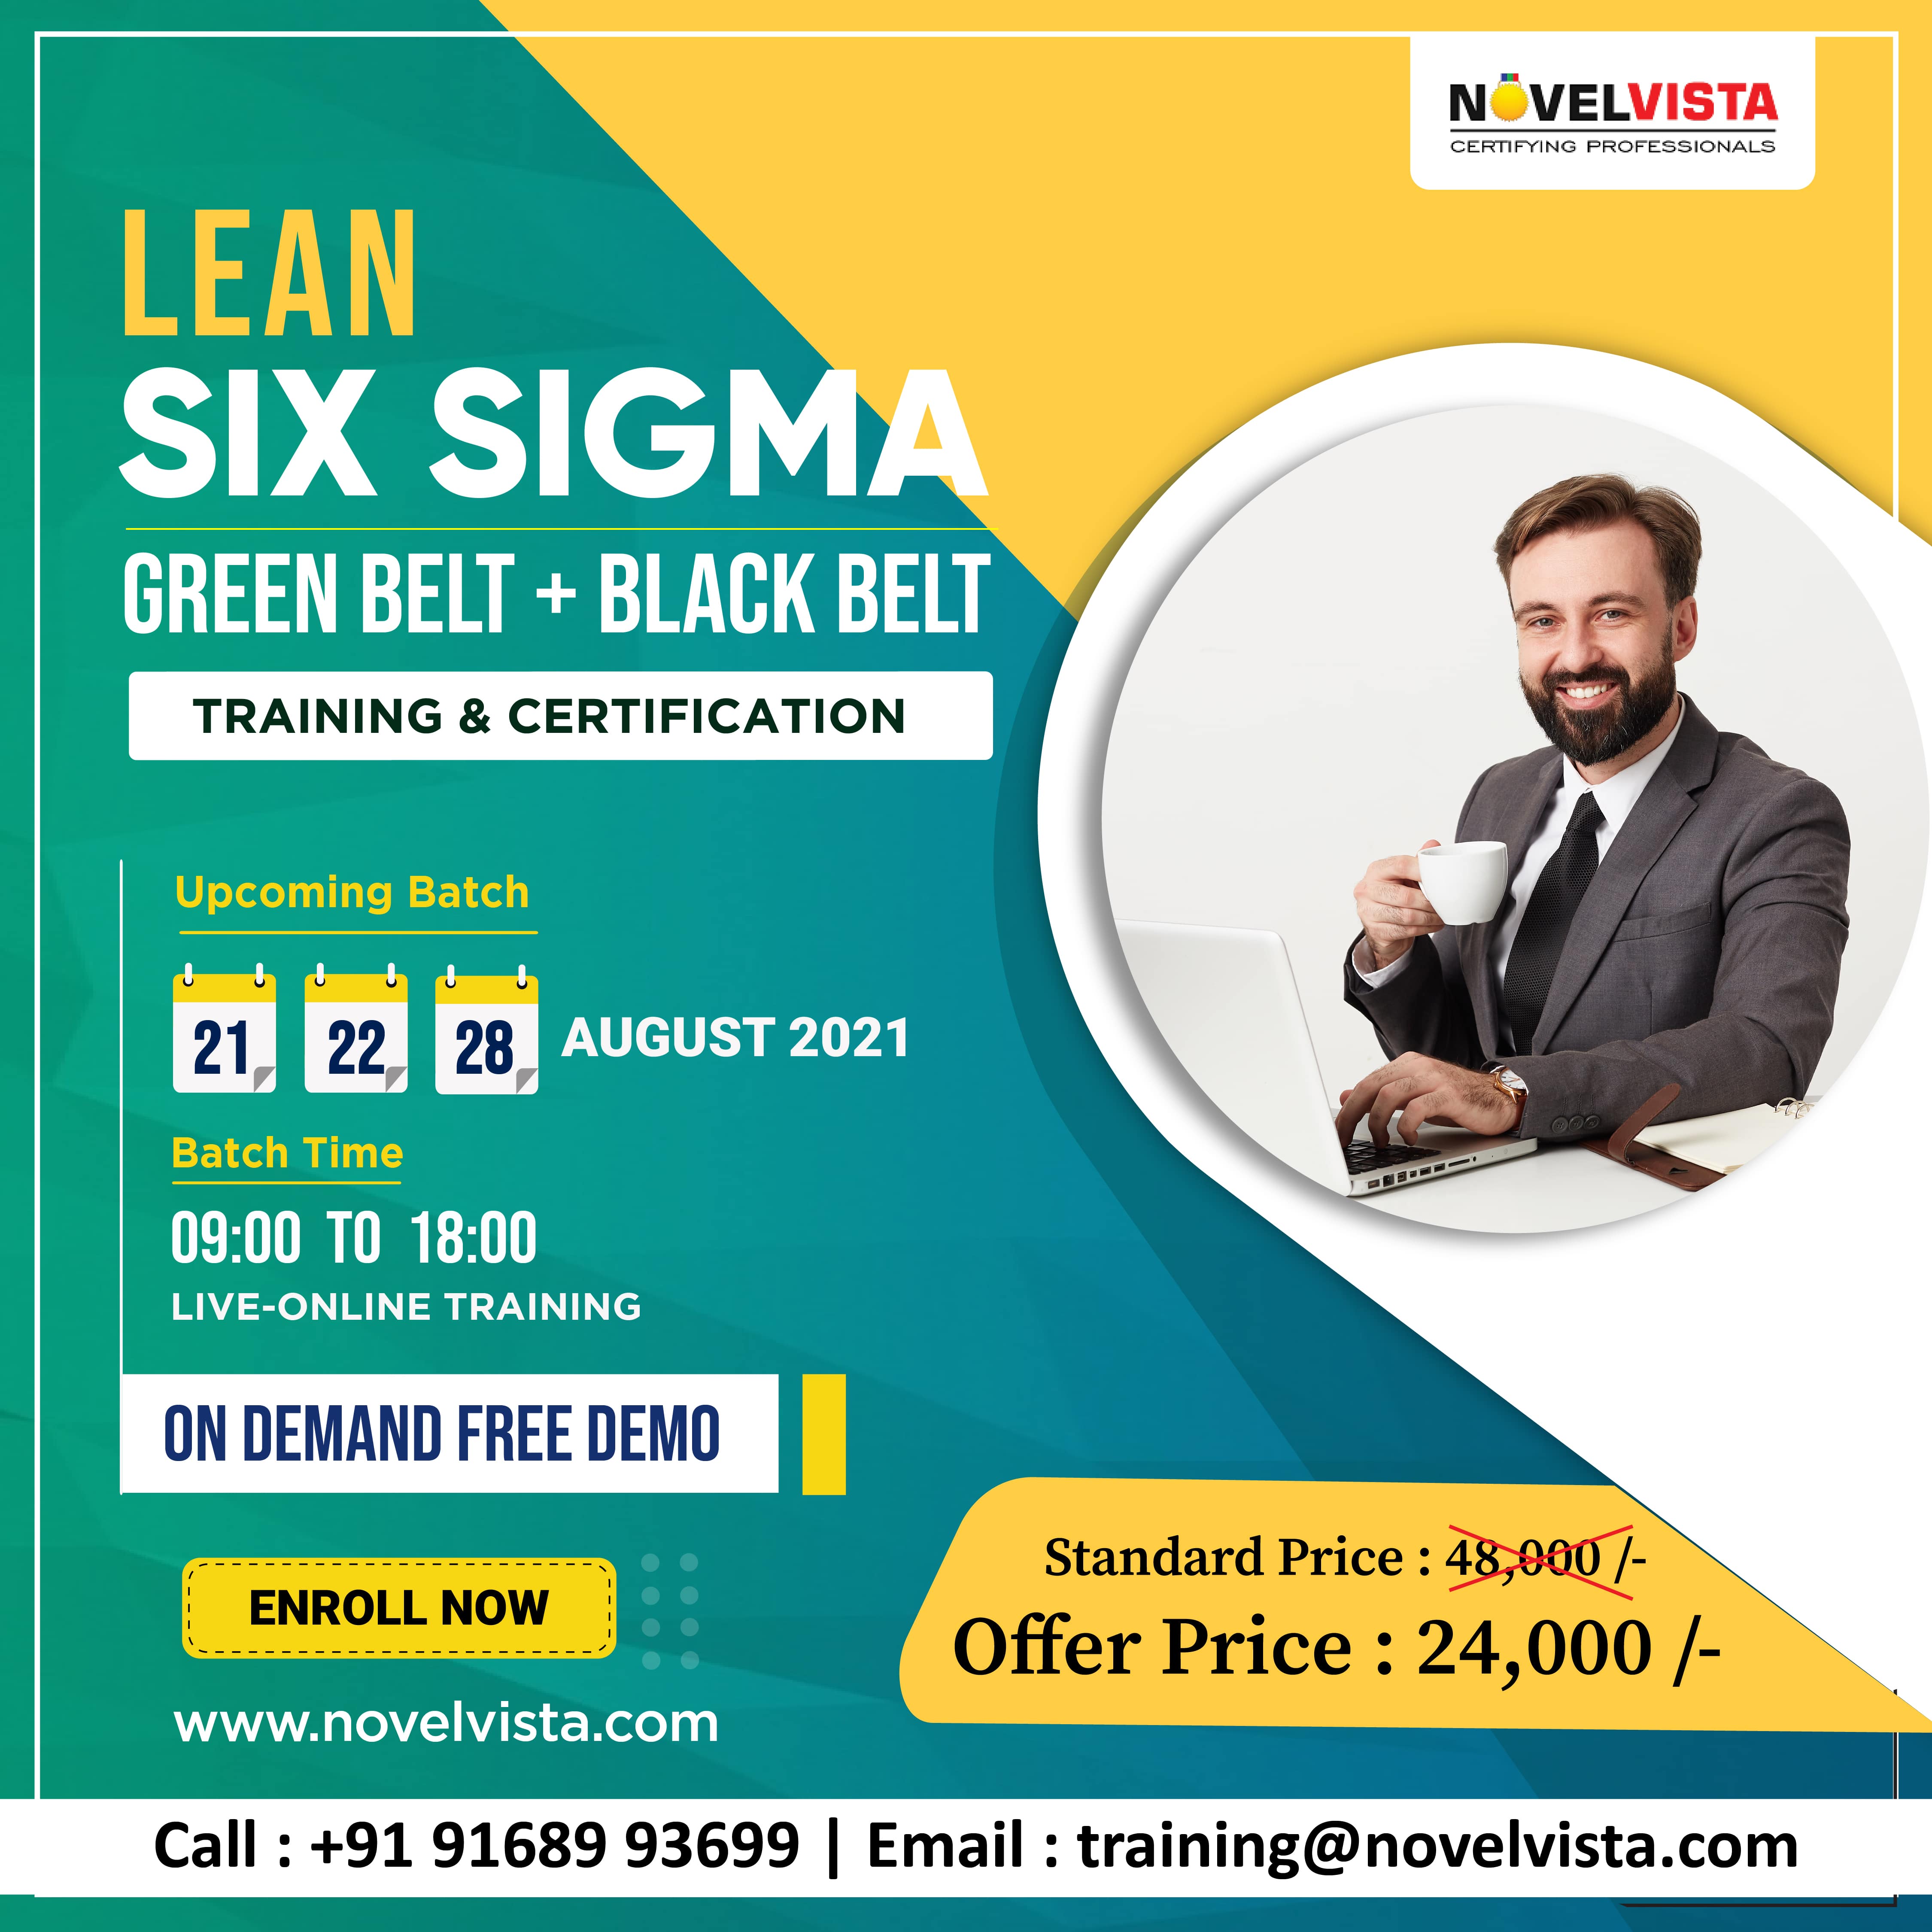 Register Now and Become Lean Six Sigma Green Belt + Black Belt Training & Certification Program., Mumbai, Maharashtra, India